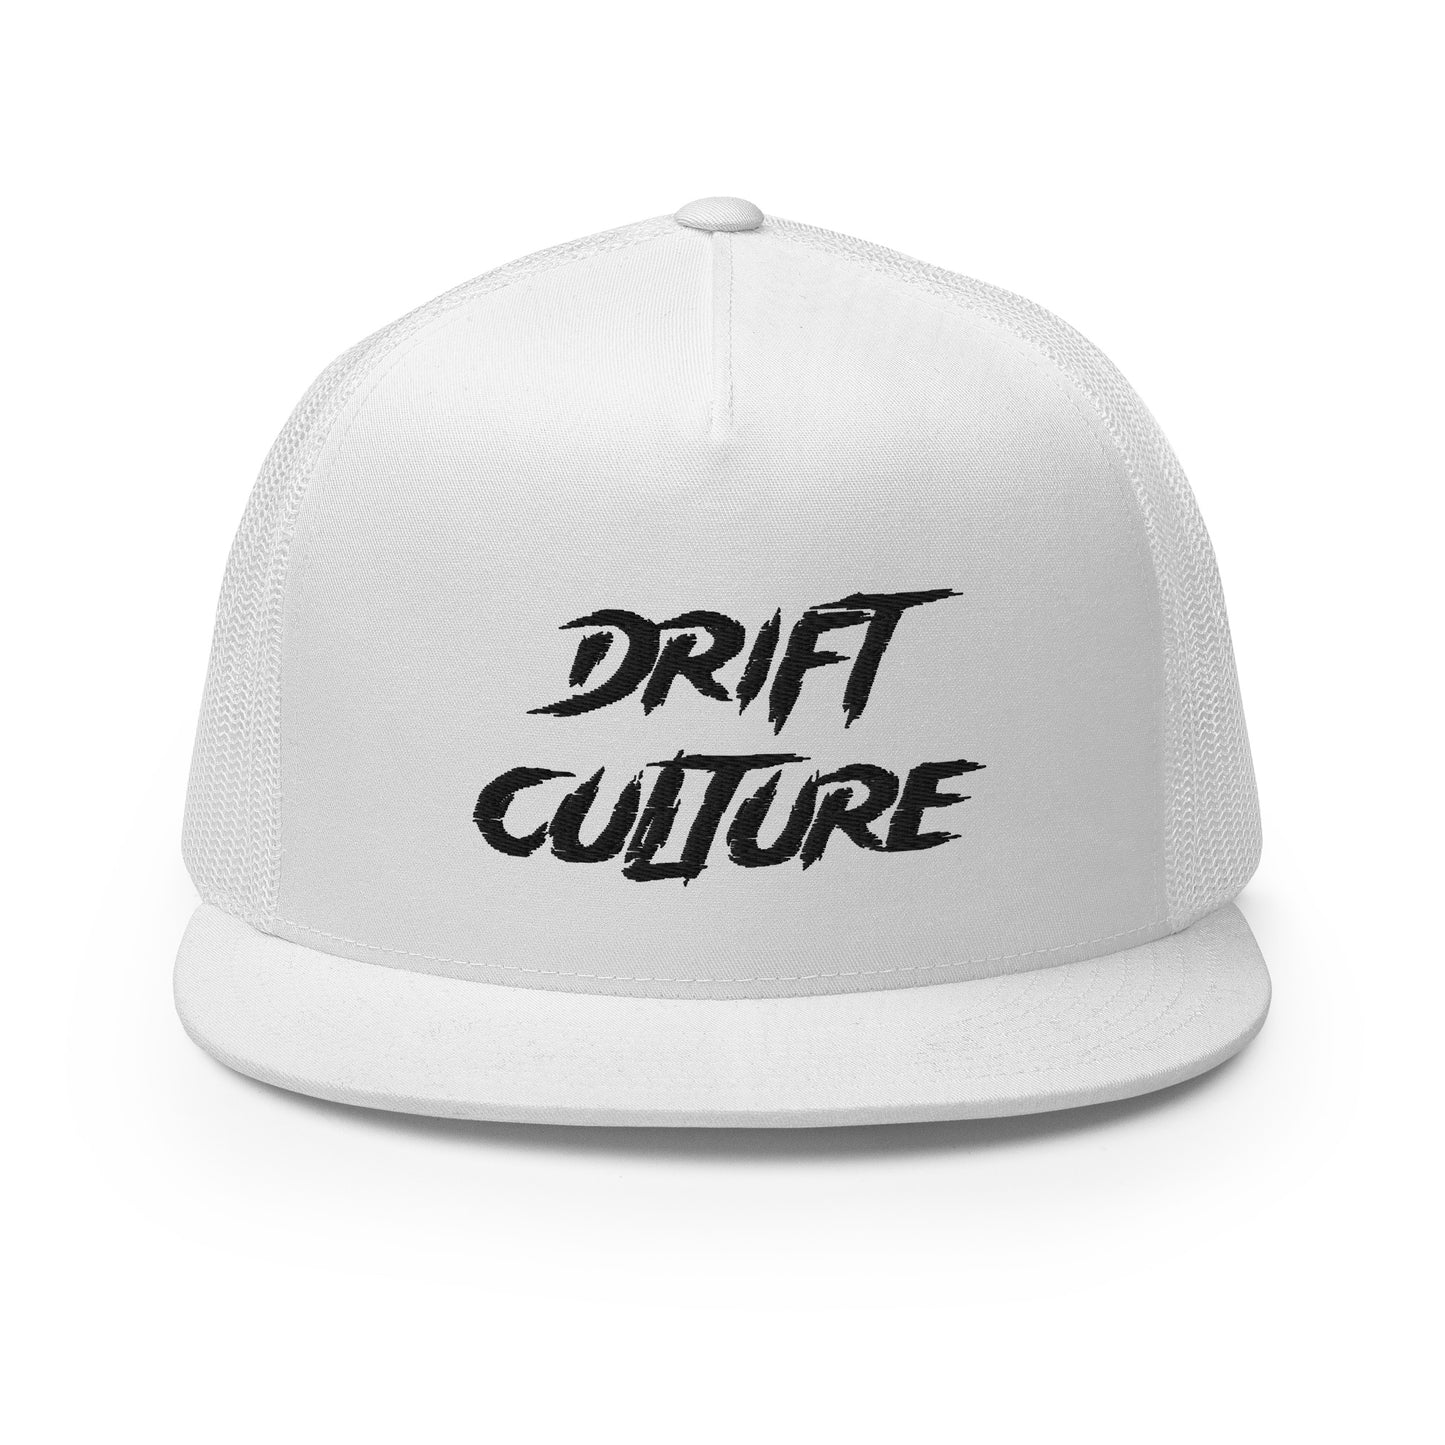 Drift Culture Trucker Cap Black